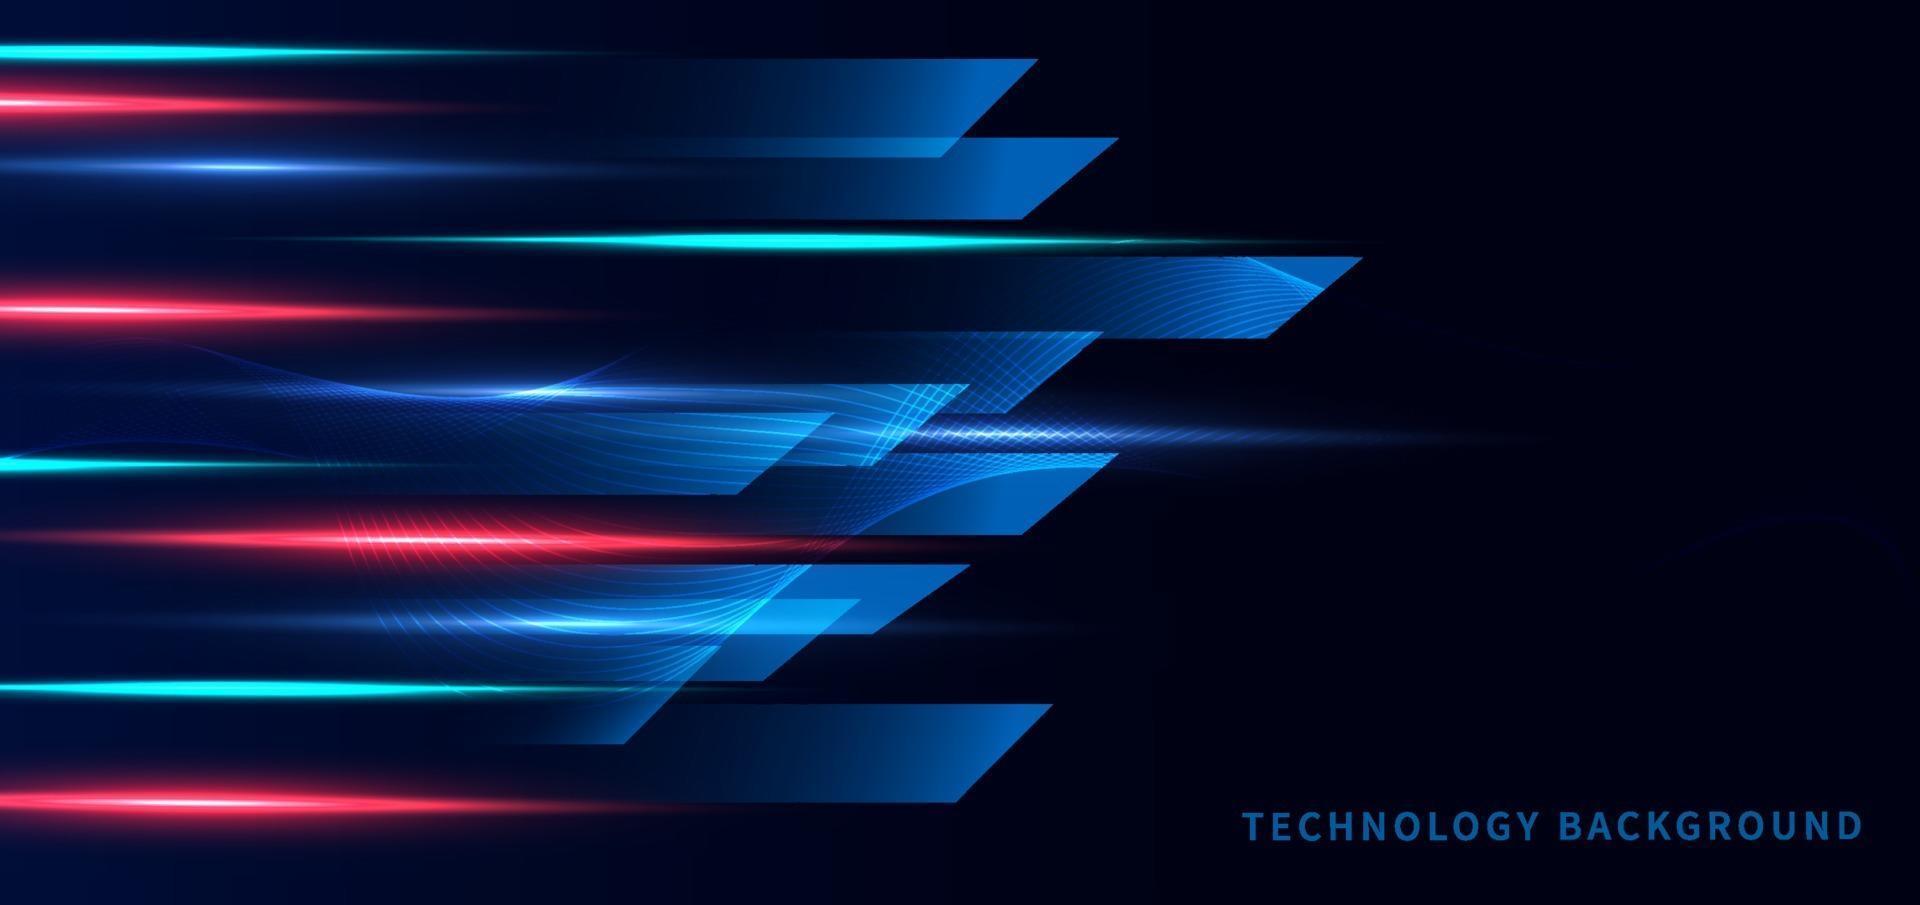 sjabloon banner abstracte technologie futuristische geometrisch op dard blauwe achtergrond met rood, blauw lichteffect. vector